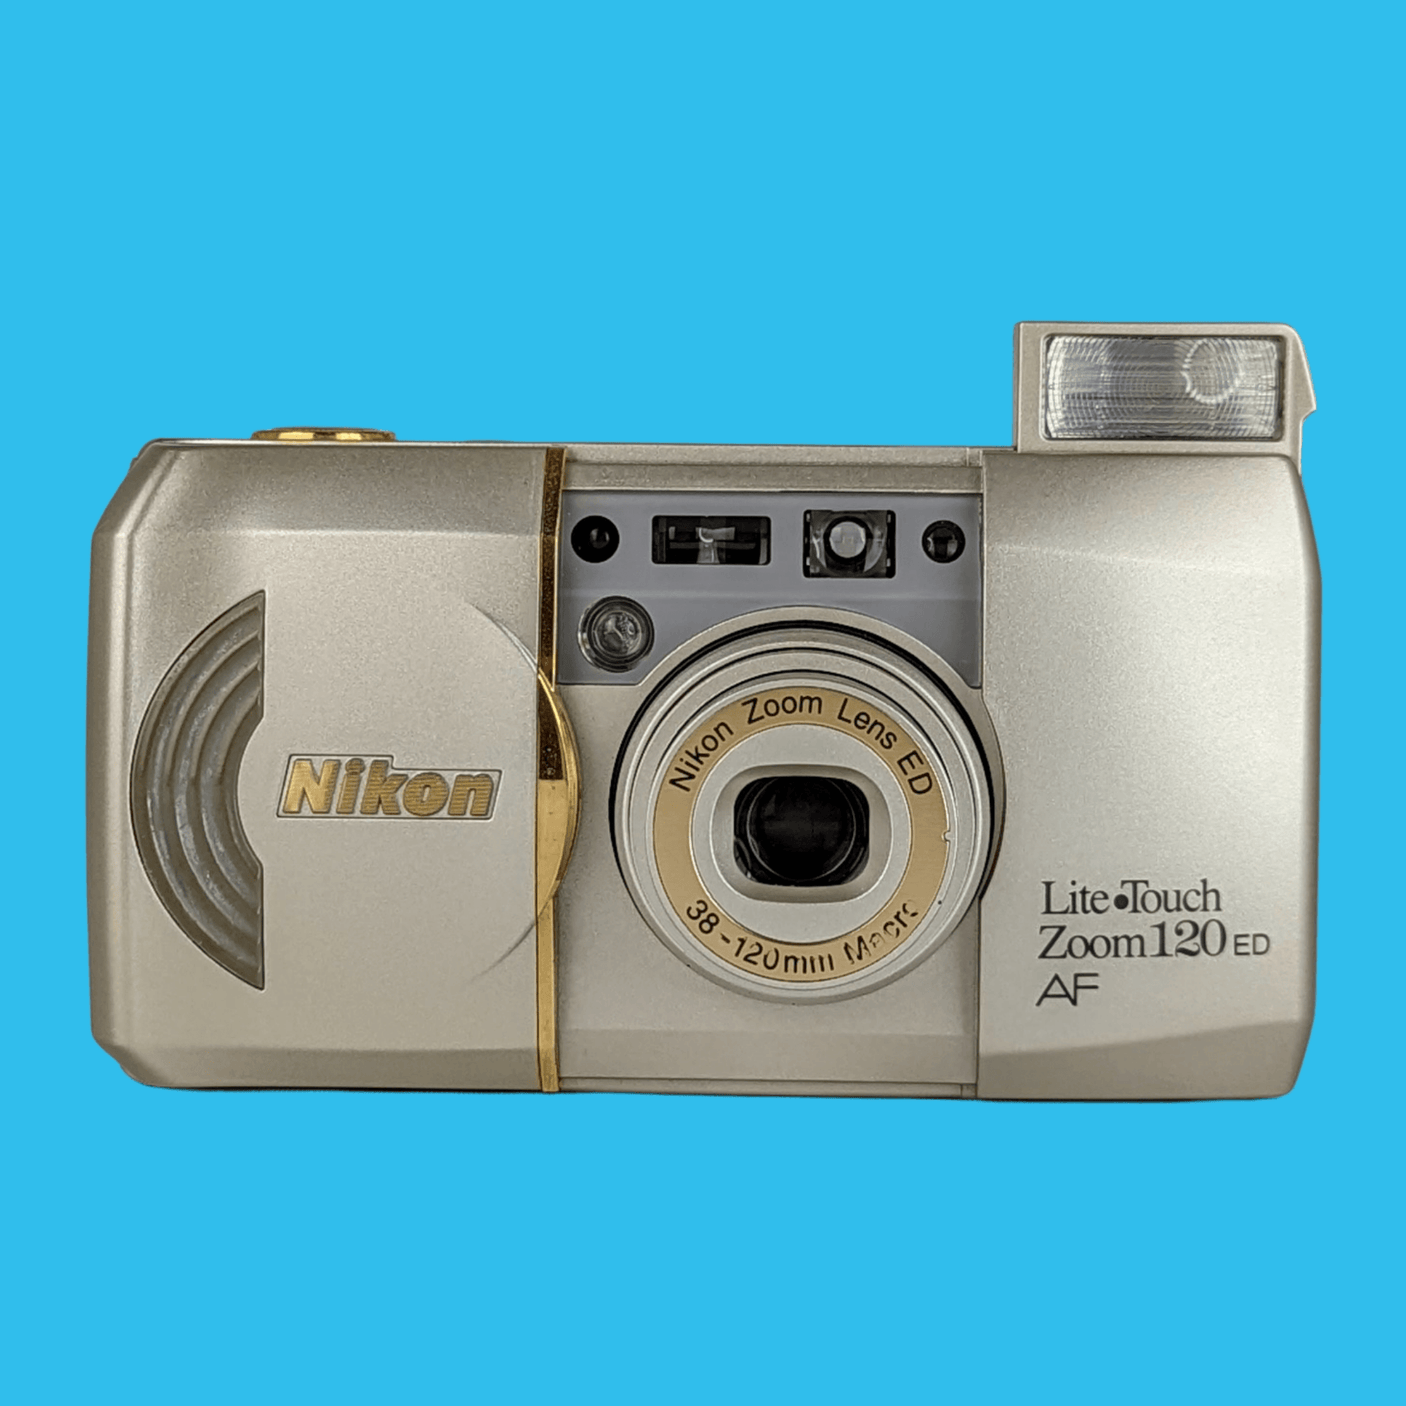 Nikon Lite○Touch Zoom 120ED☆フィルムカメラ - フィルムカメラ